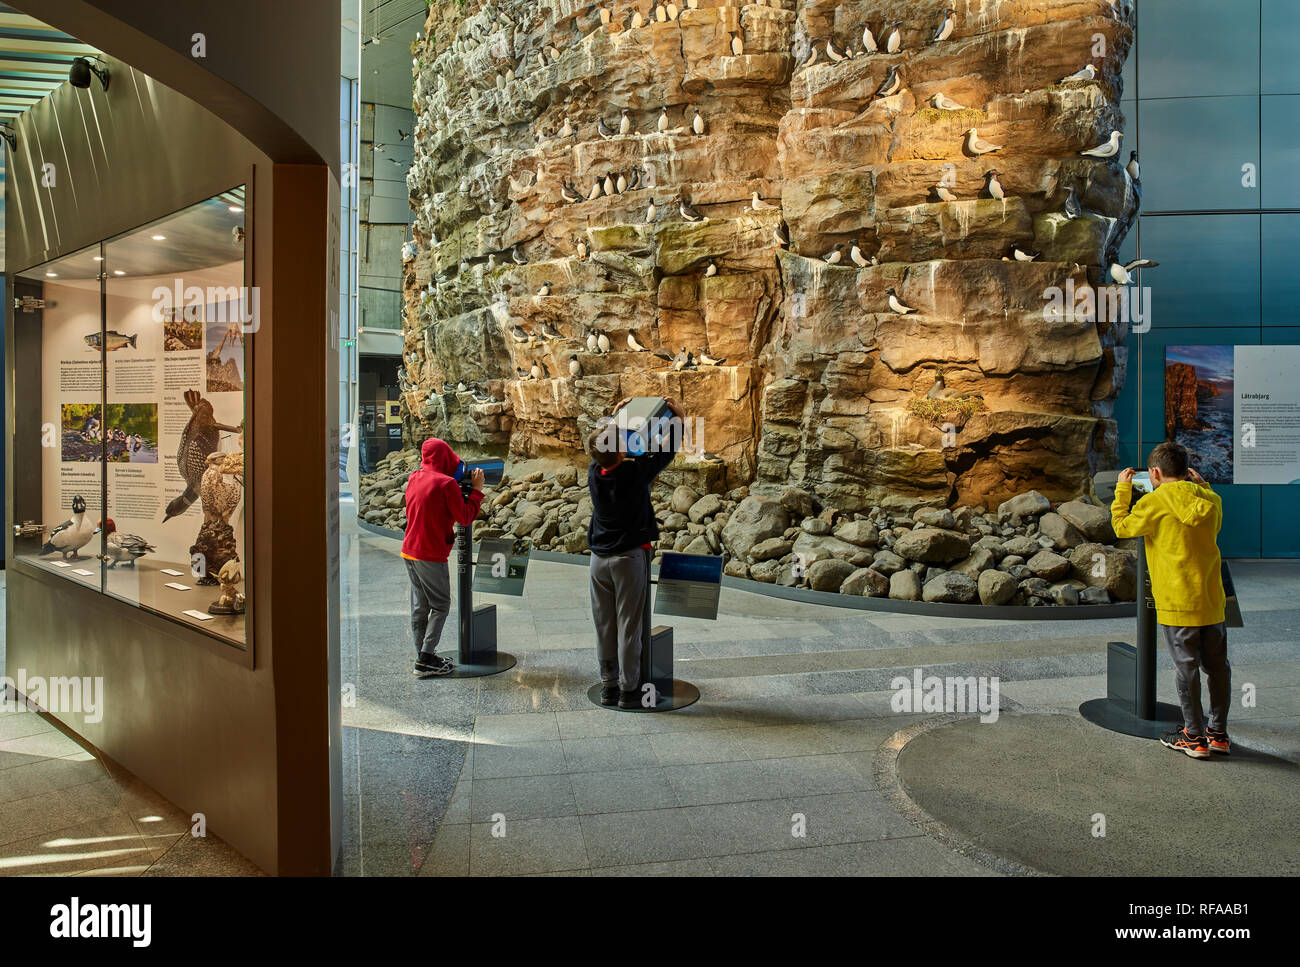 Musée Perlan (La Perle) Reykjavik, Islande. Perlan expose la nature islandaise dans moyens high-tech. Banque D'Images